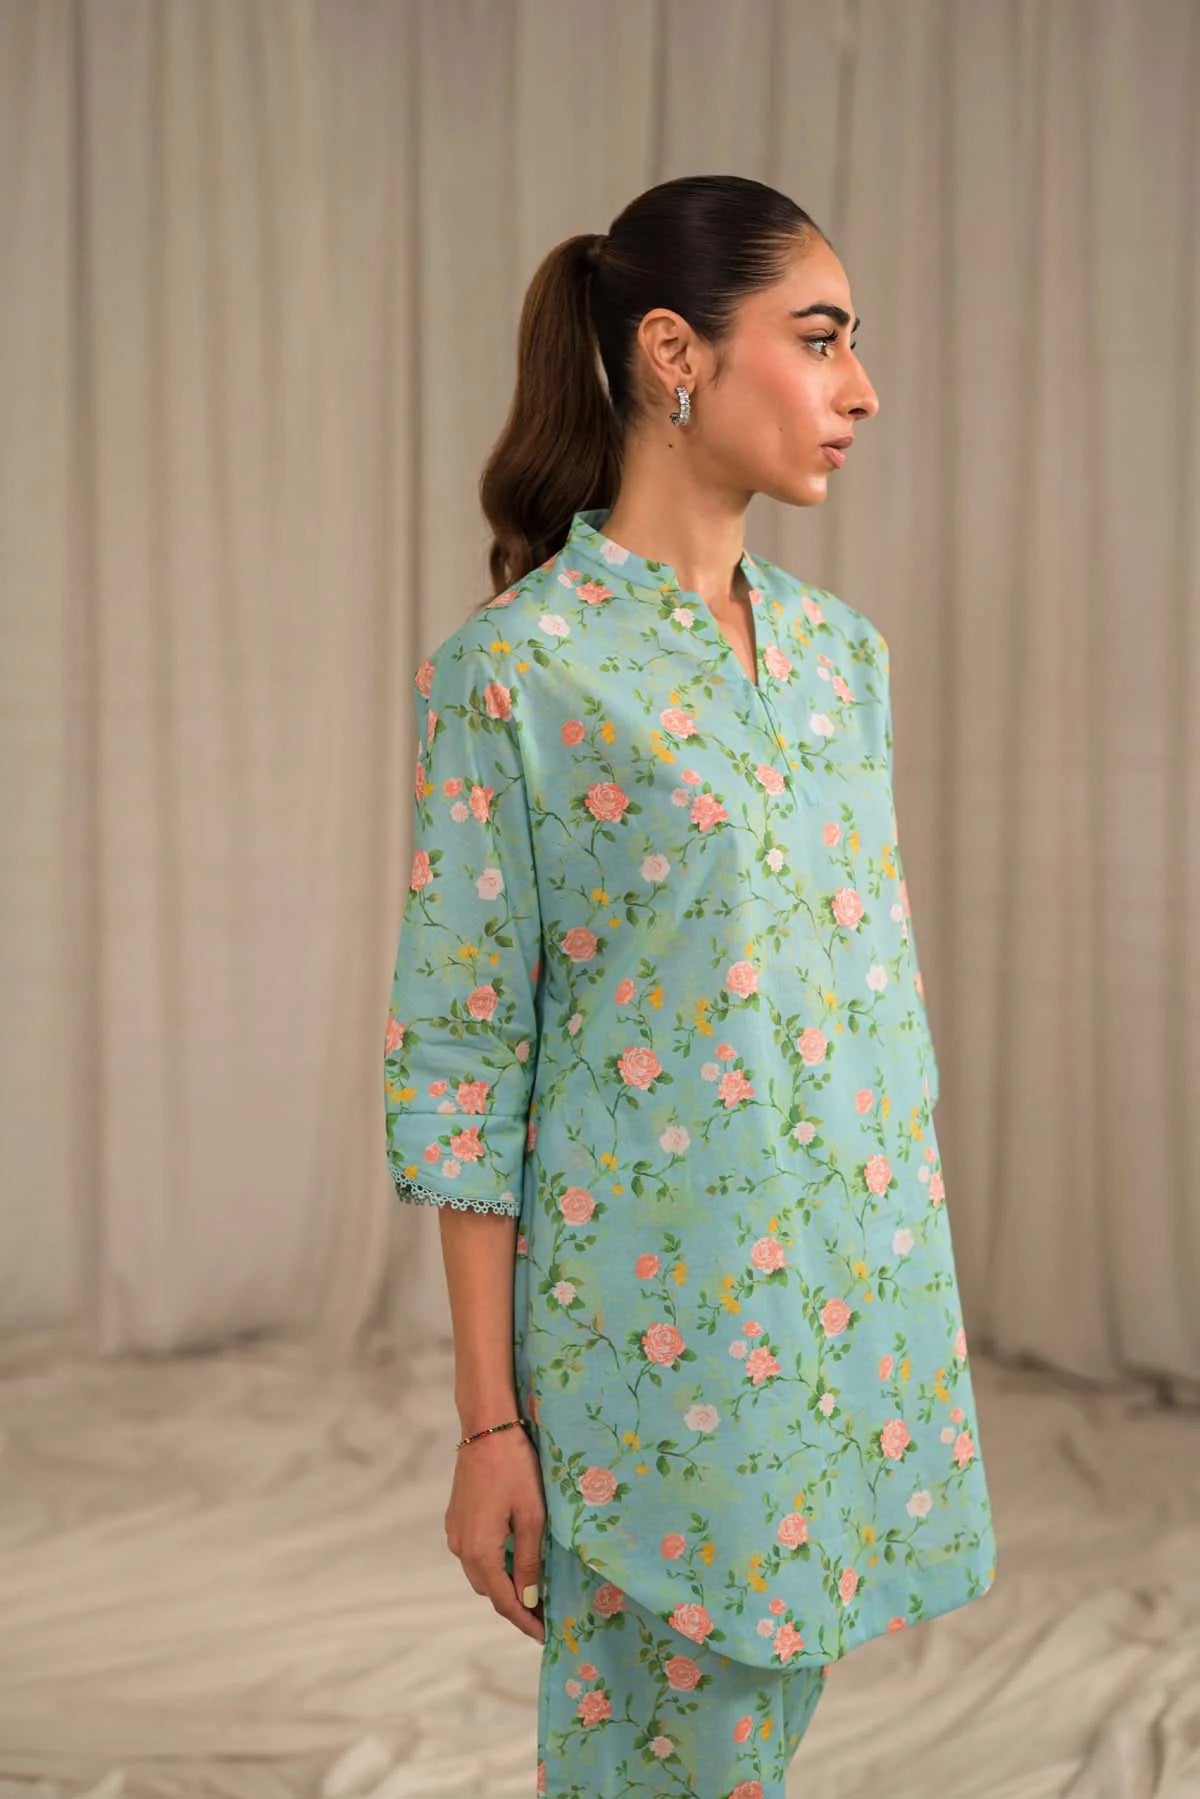 Sahar Printed Lawn Suits Unstitched 2 Piece SHR-S24-PL-V1-13 - Summer Collection